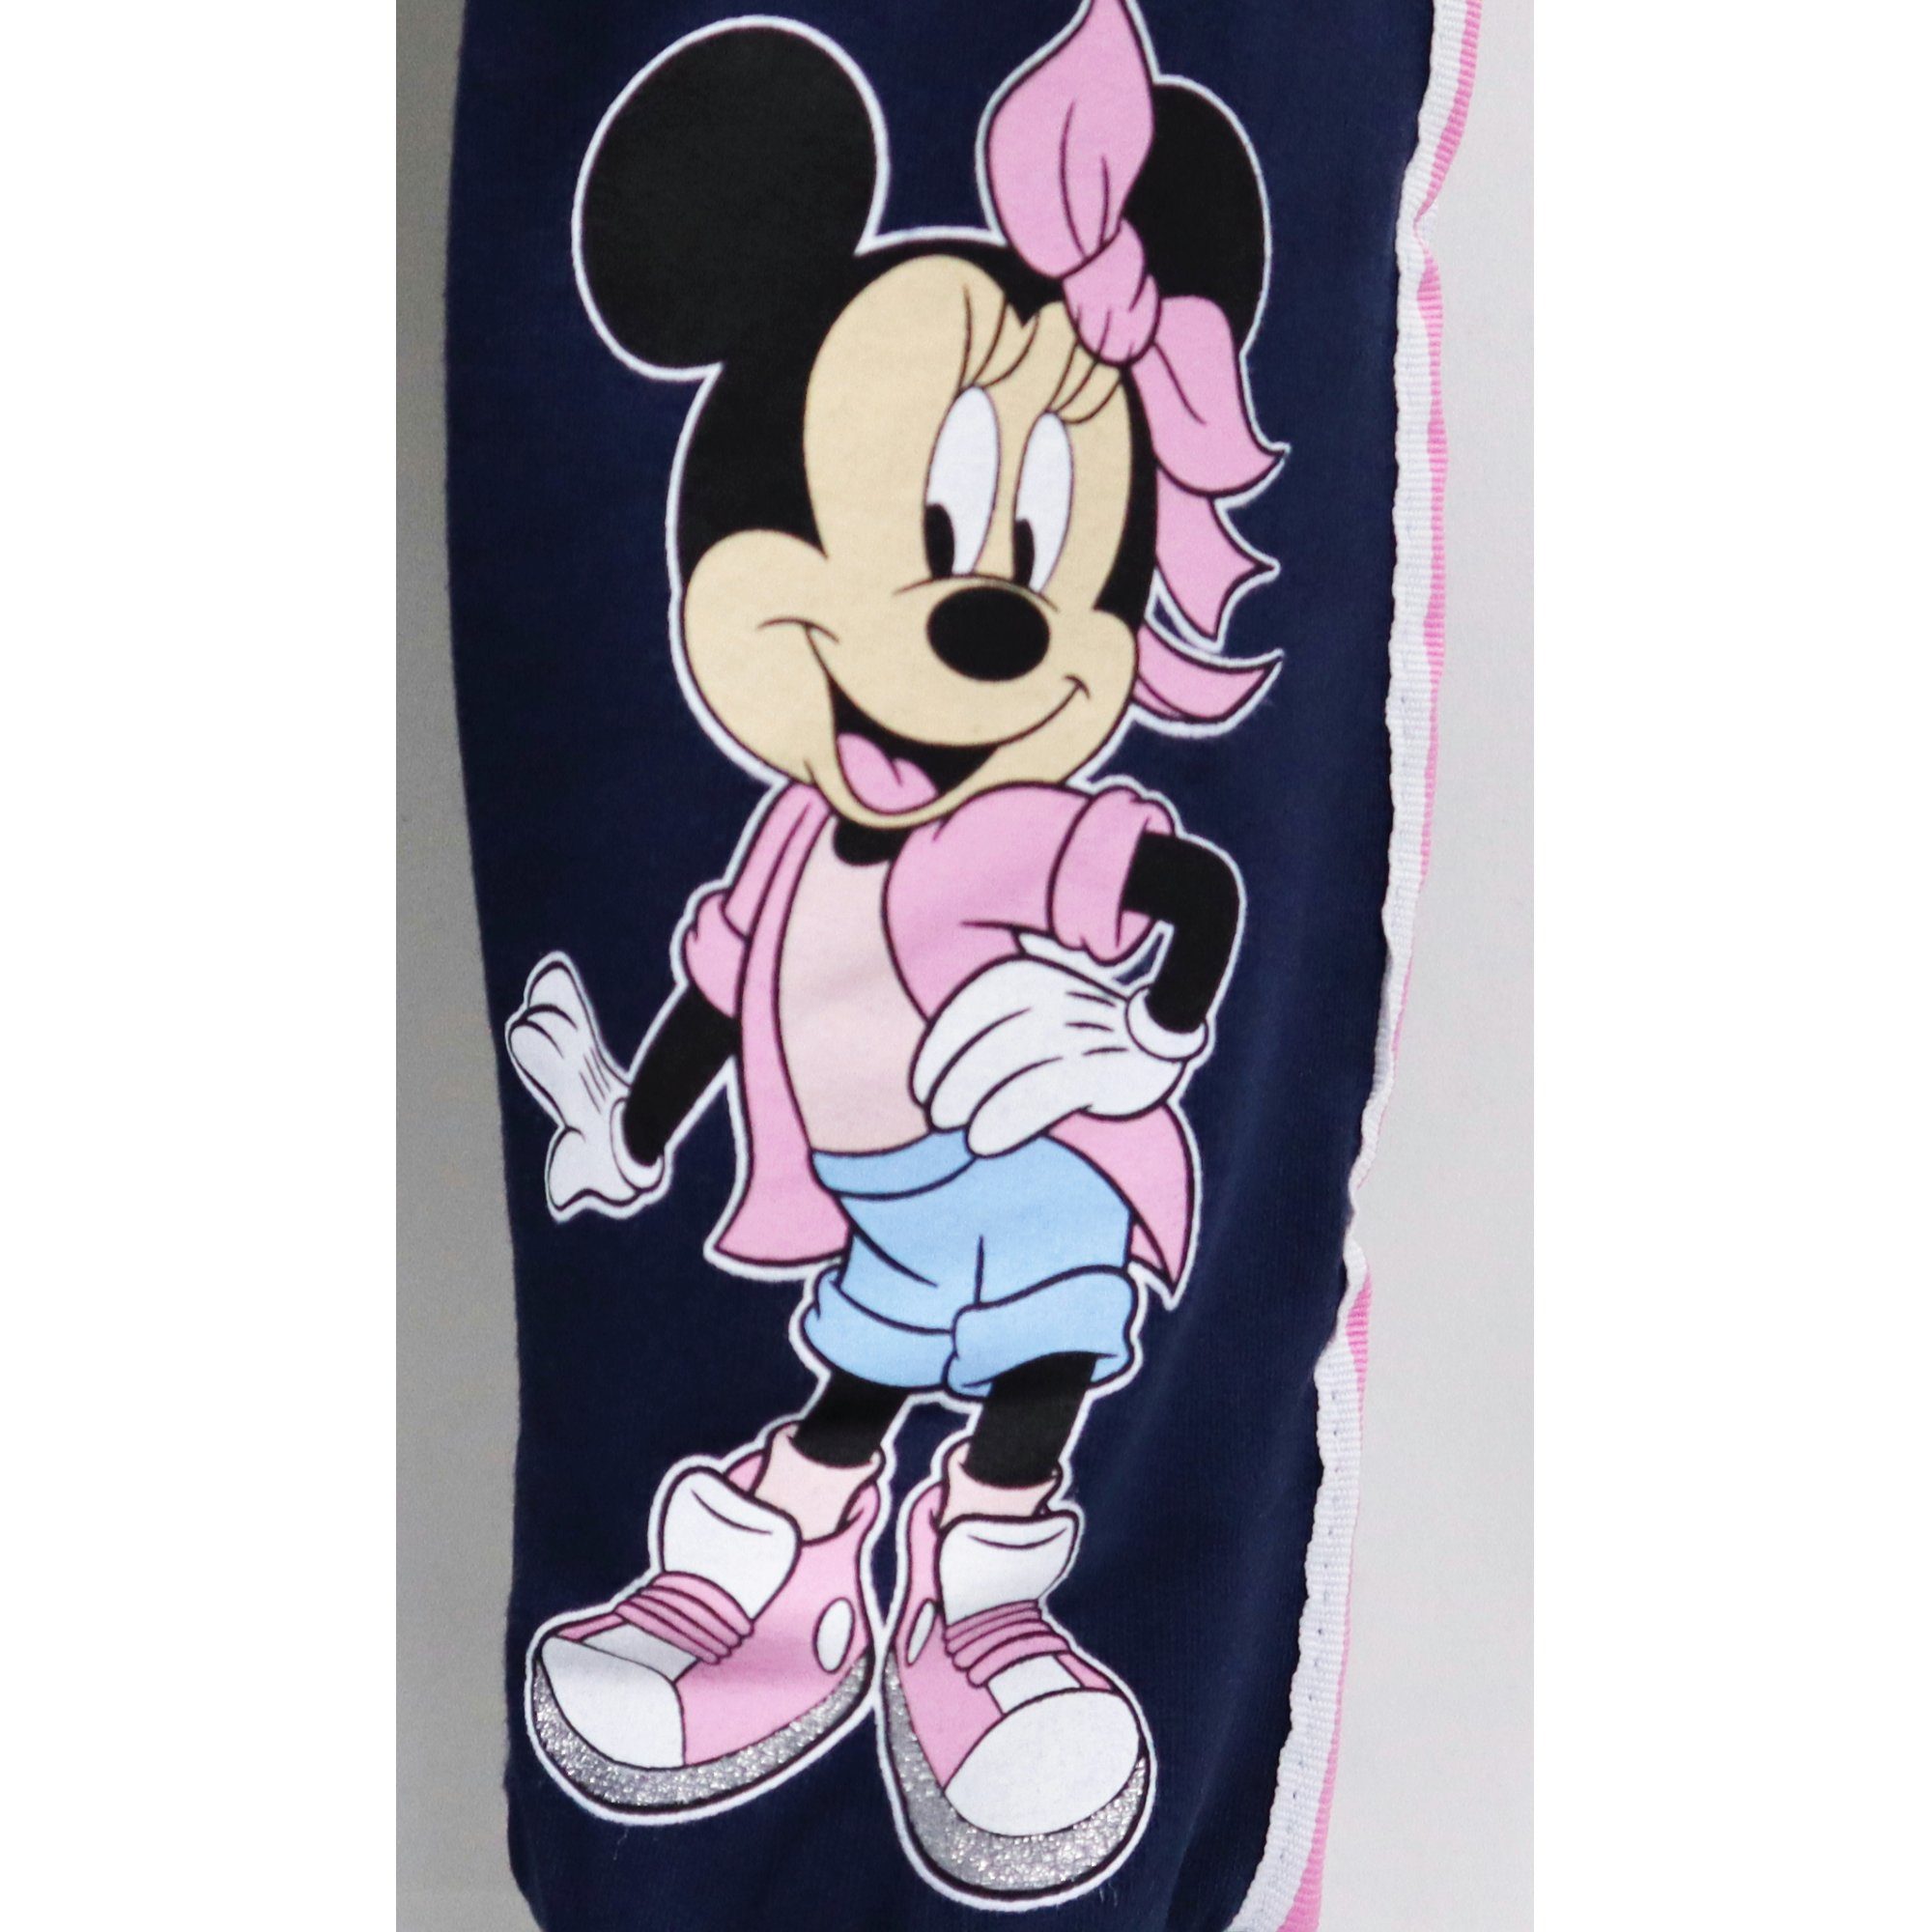 Disney 104 Dunkelblau bis Maus Kinder Mädchen Hose Jogginghose Minnie Mouse Gr. 134, Minnie Disney